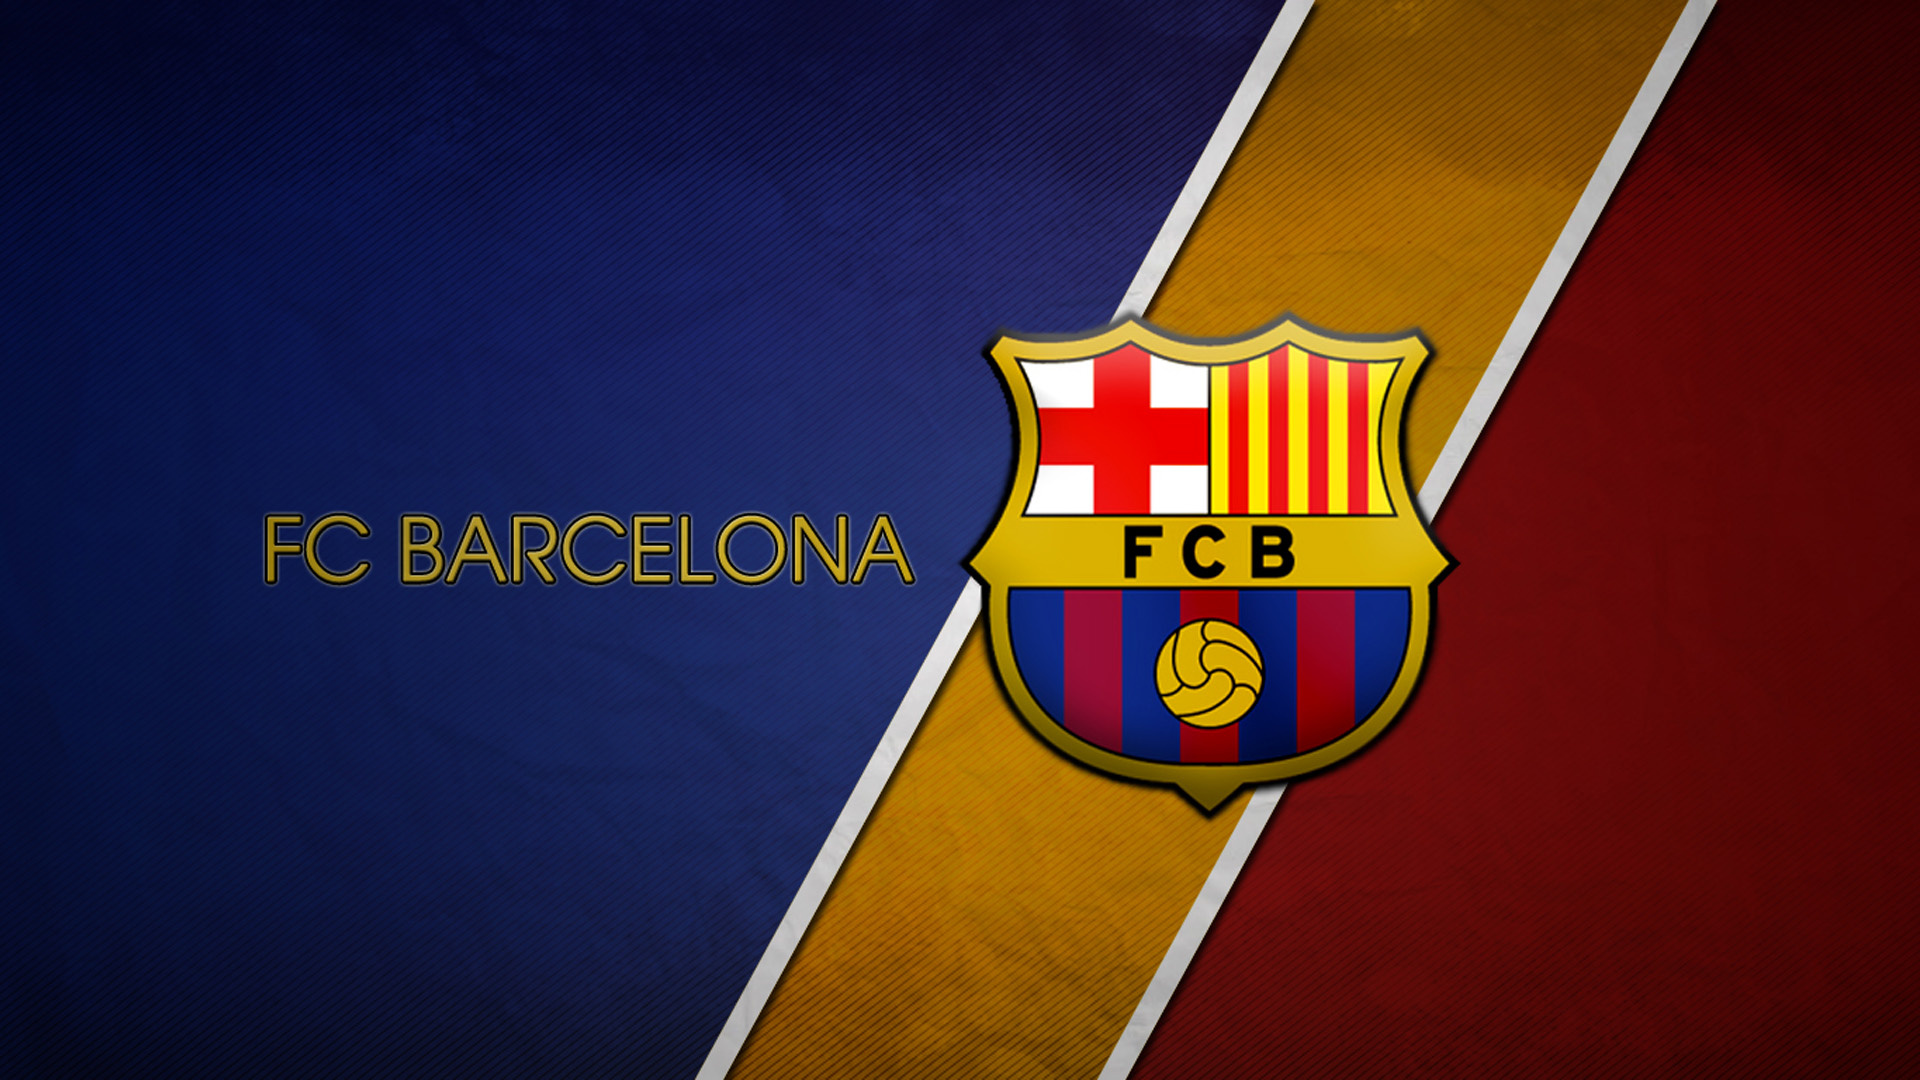 FC Barcelona logo wallpaper, Download, 1920x1080 Full HD Desktop